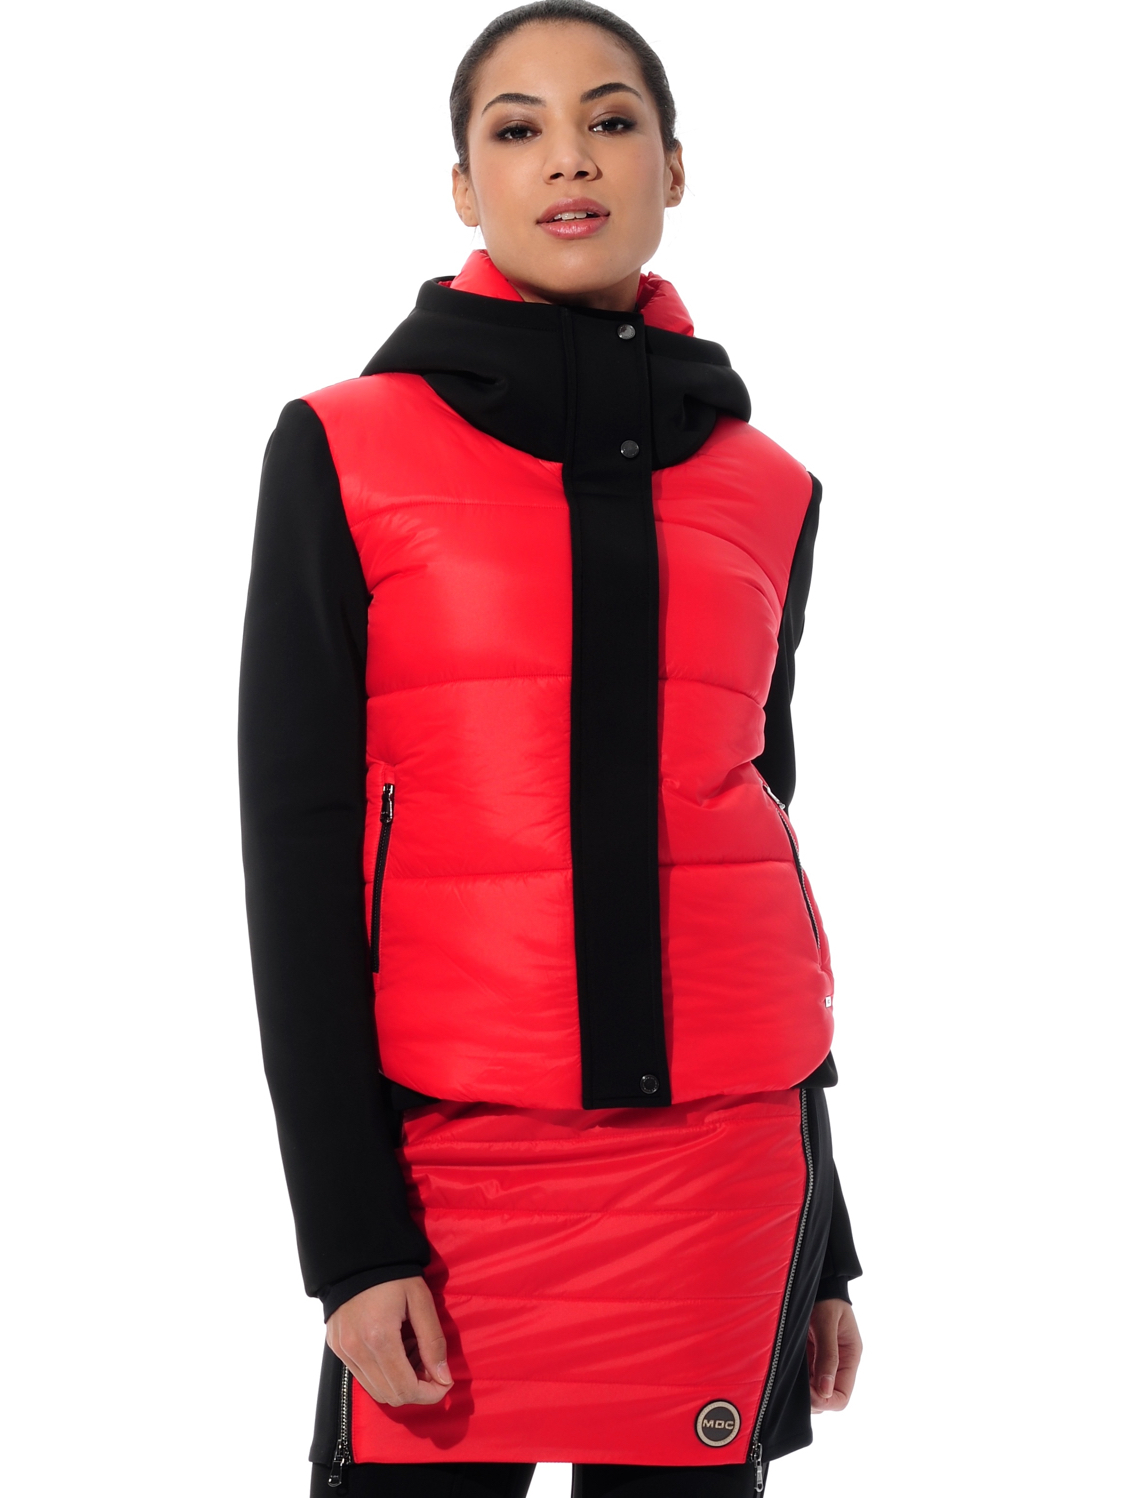 ski jacket red/black 